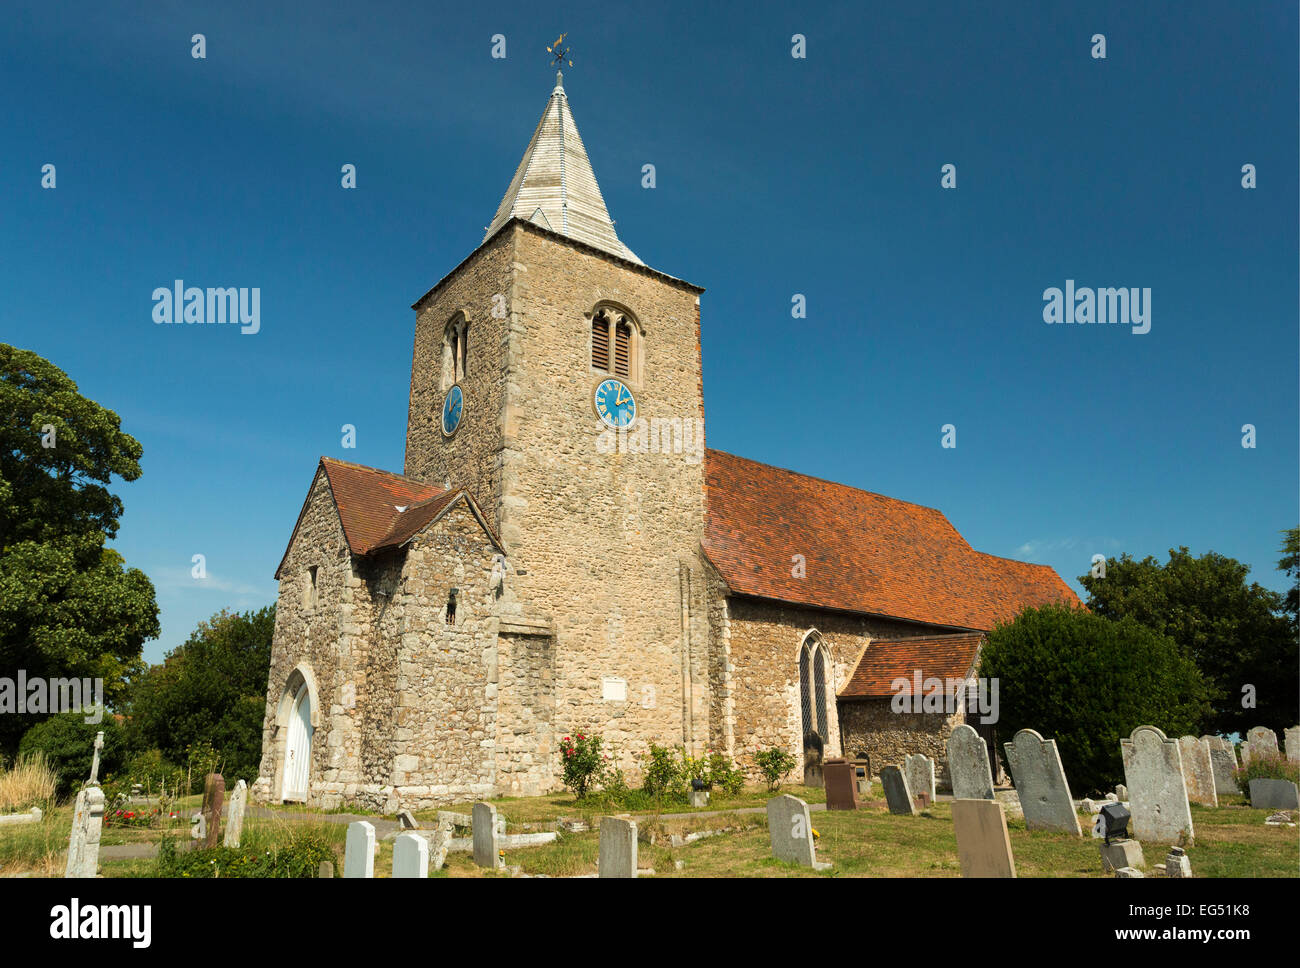 St Nicholas Church in Great Wakering, Essex, UK Stock Photo